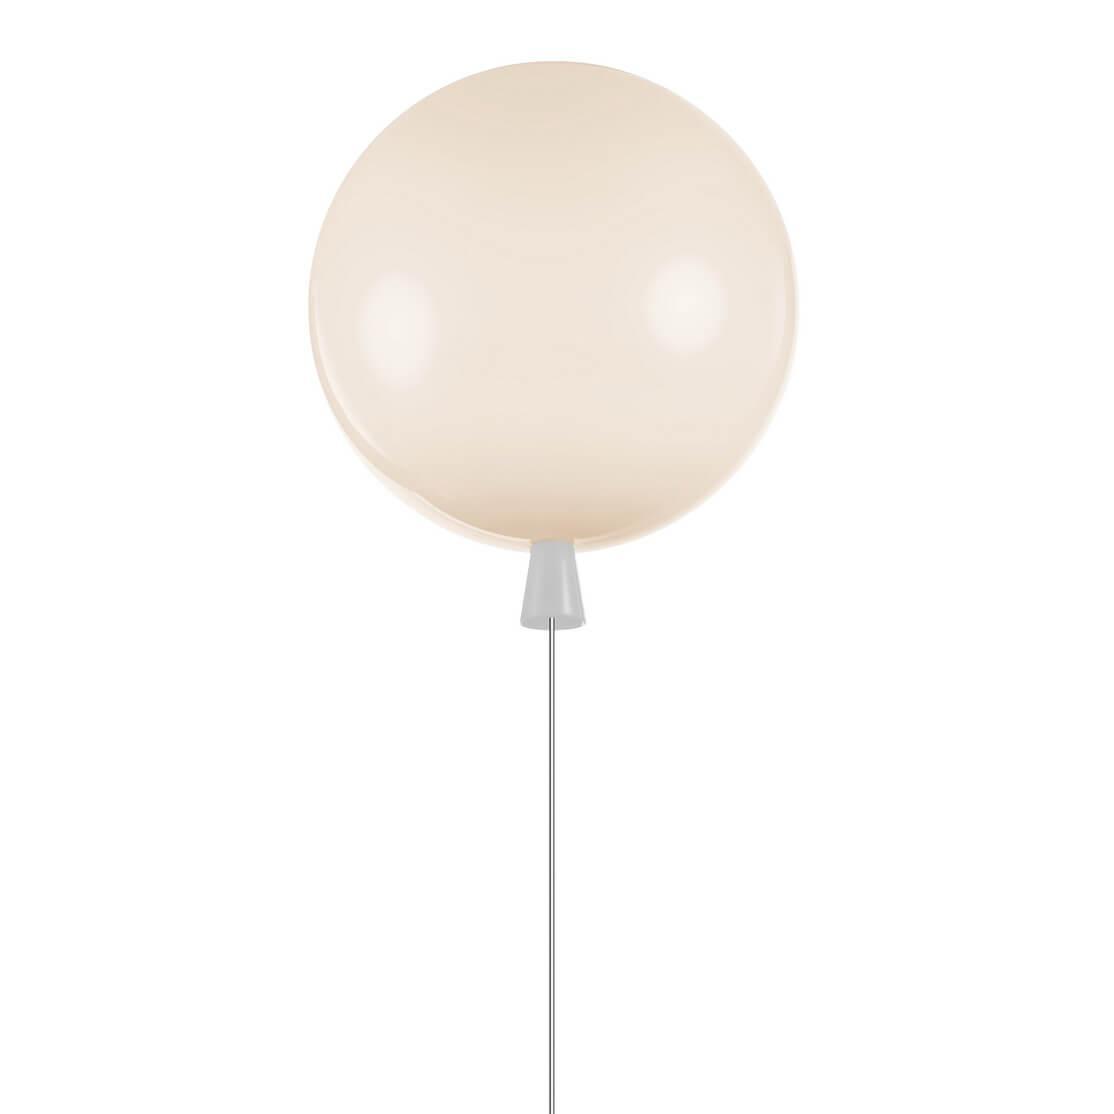 Потолочный светильник LOFT IT Balloon 5055C/S white